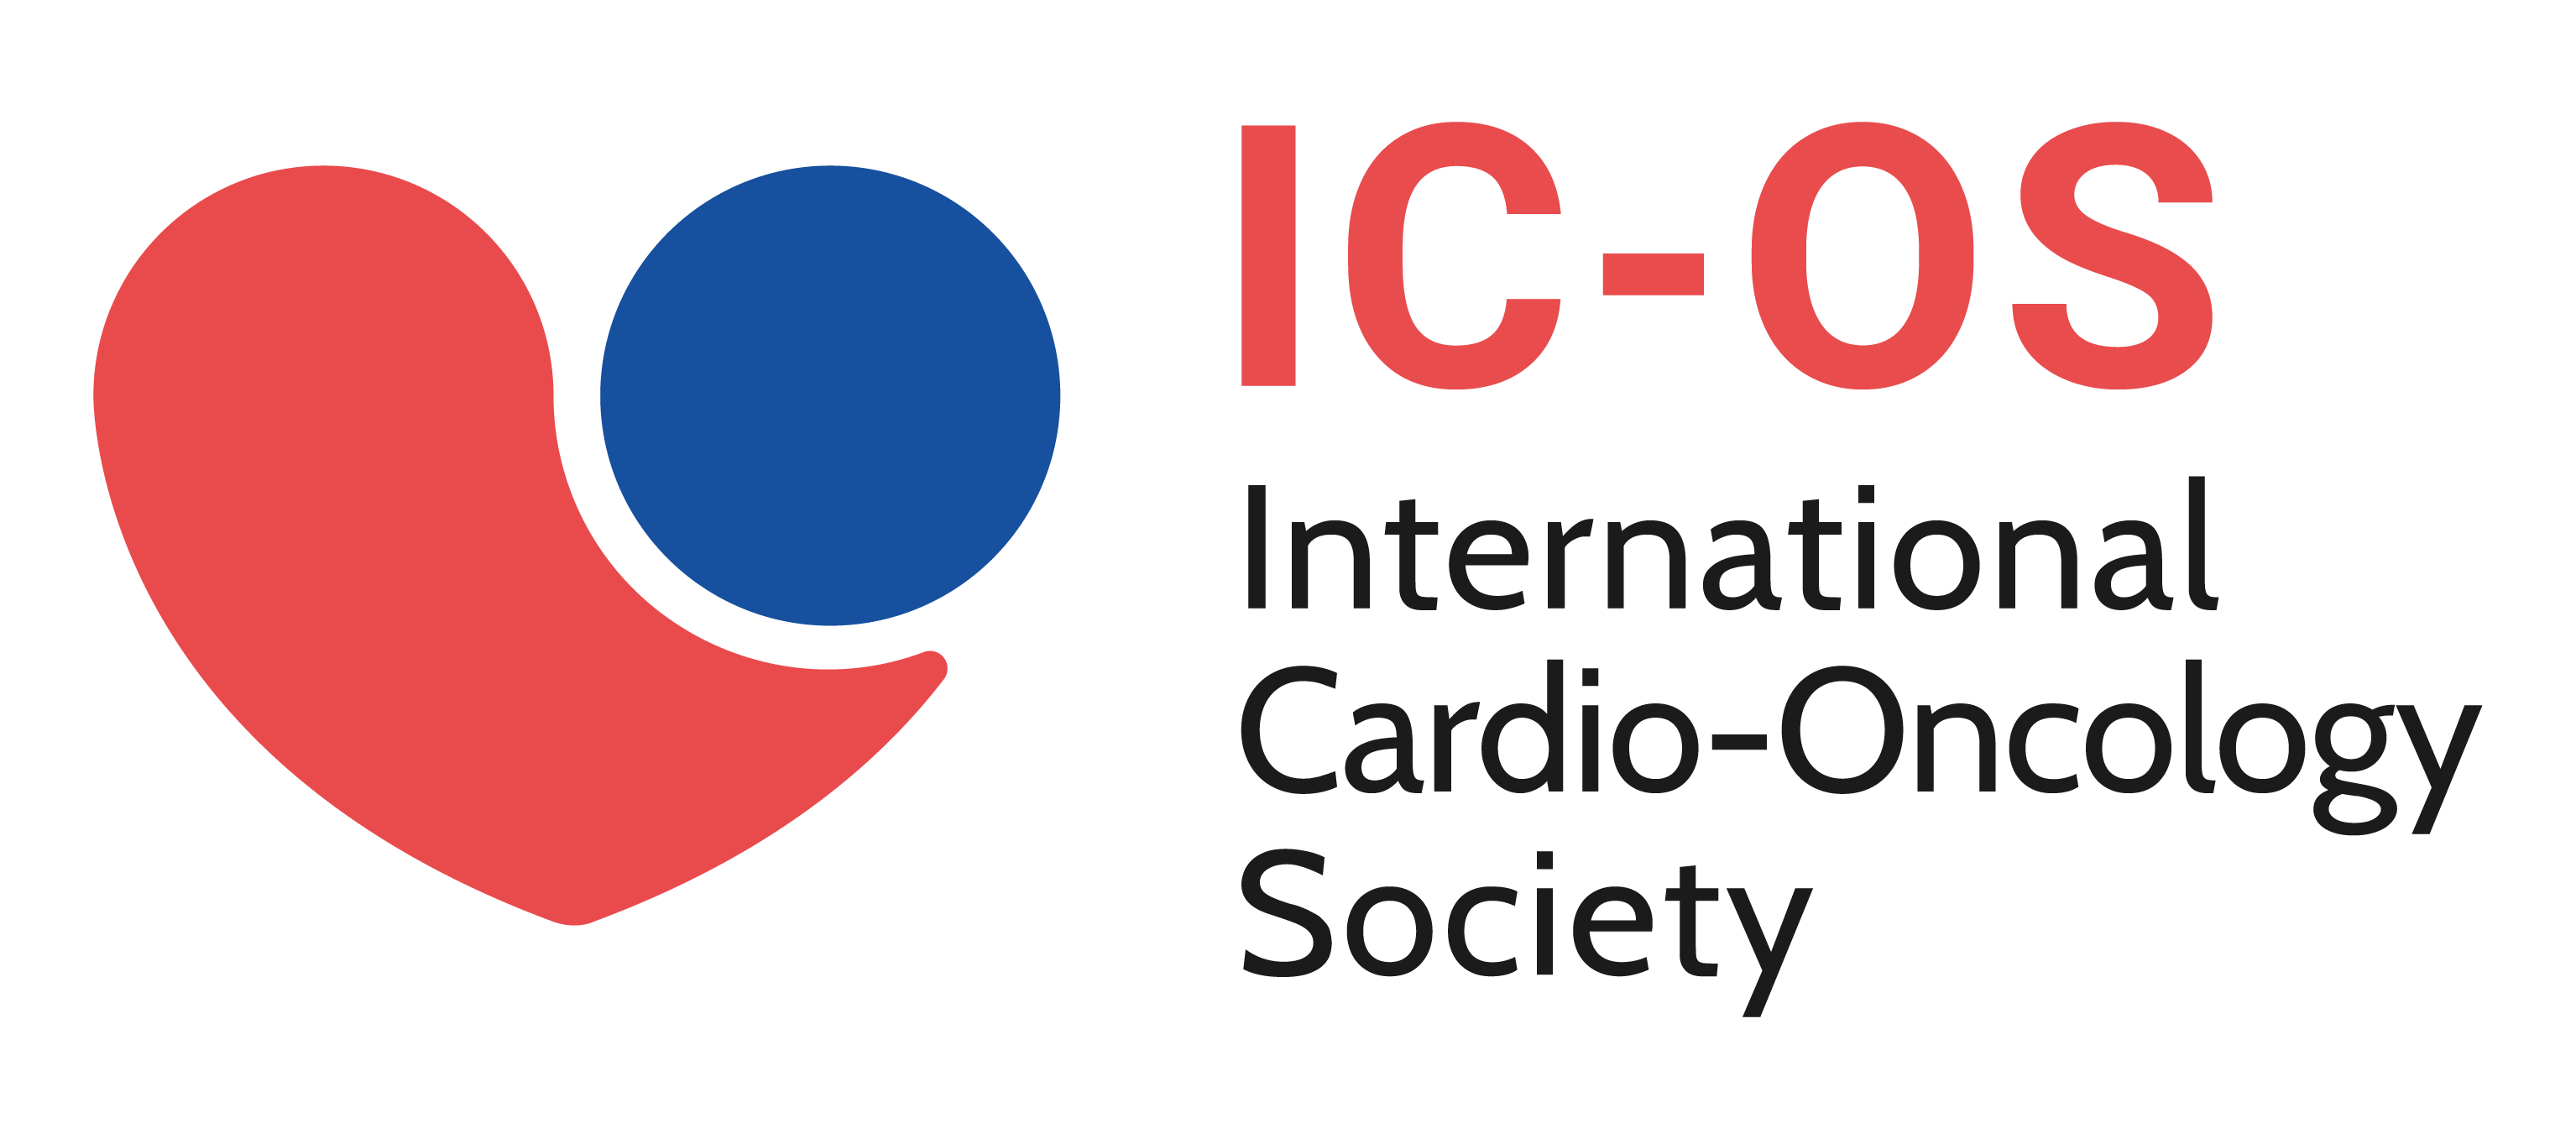 International Cardio-Oncology Society (FICOS)